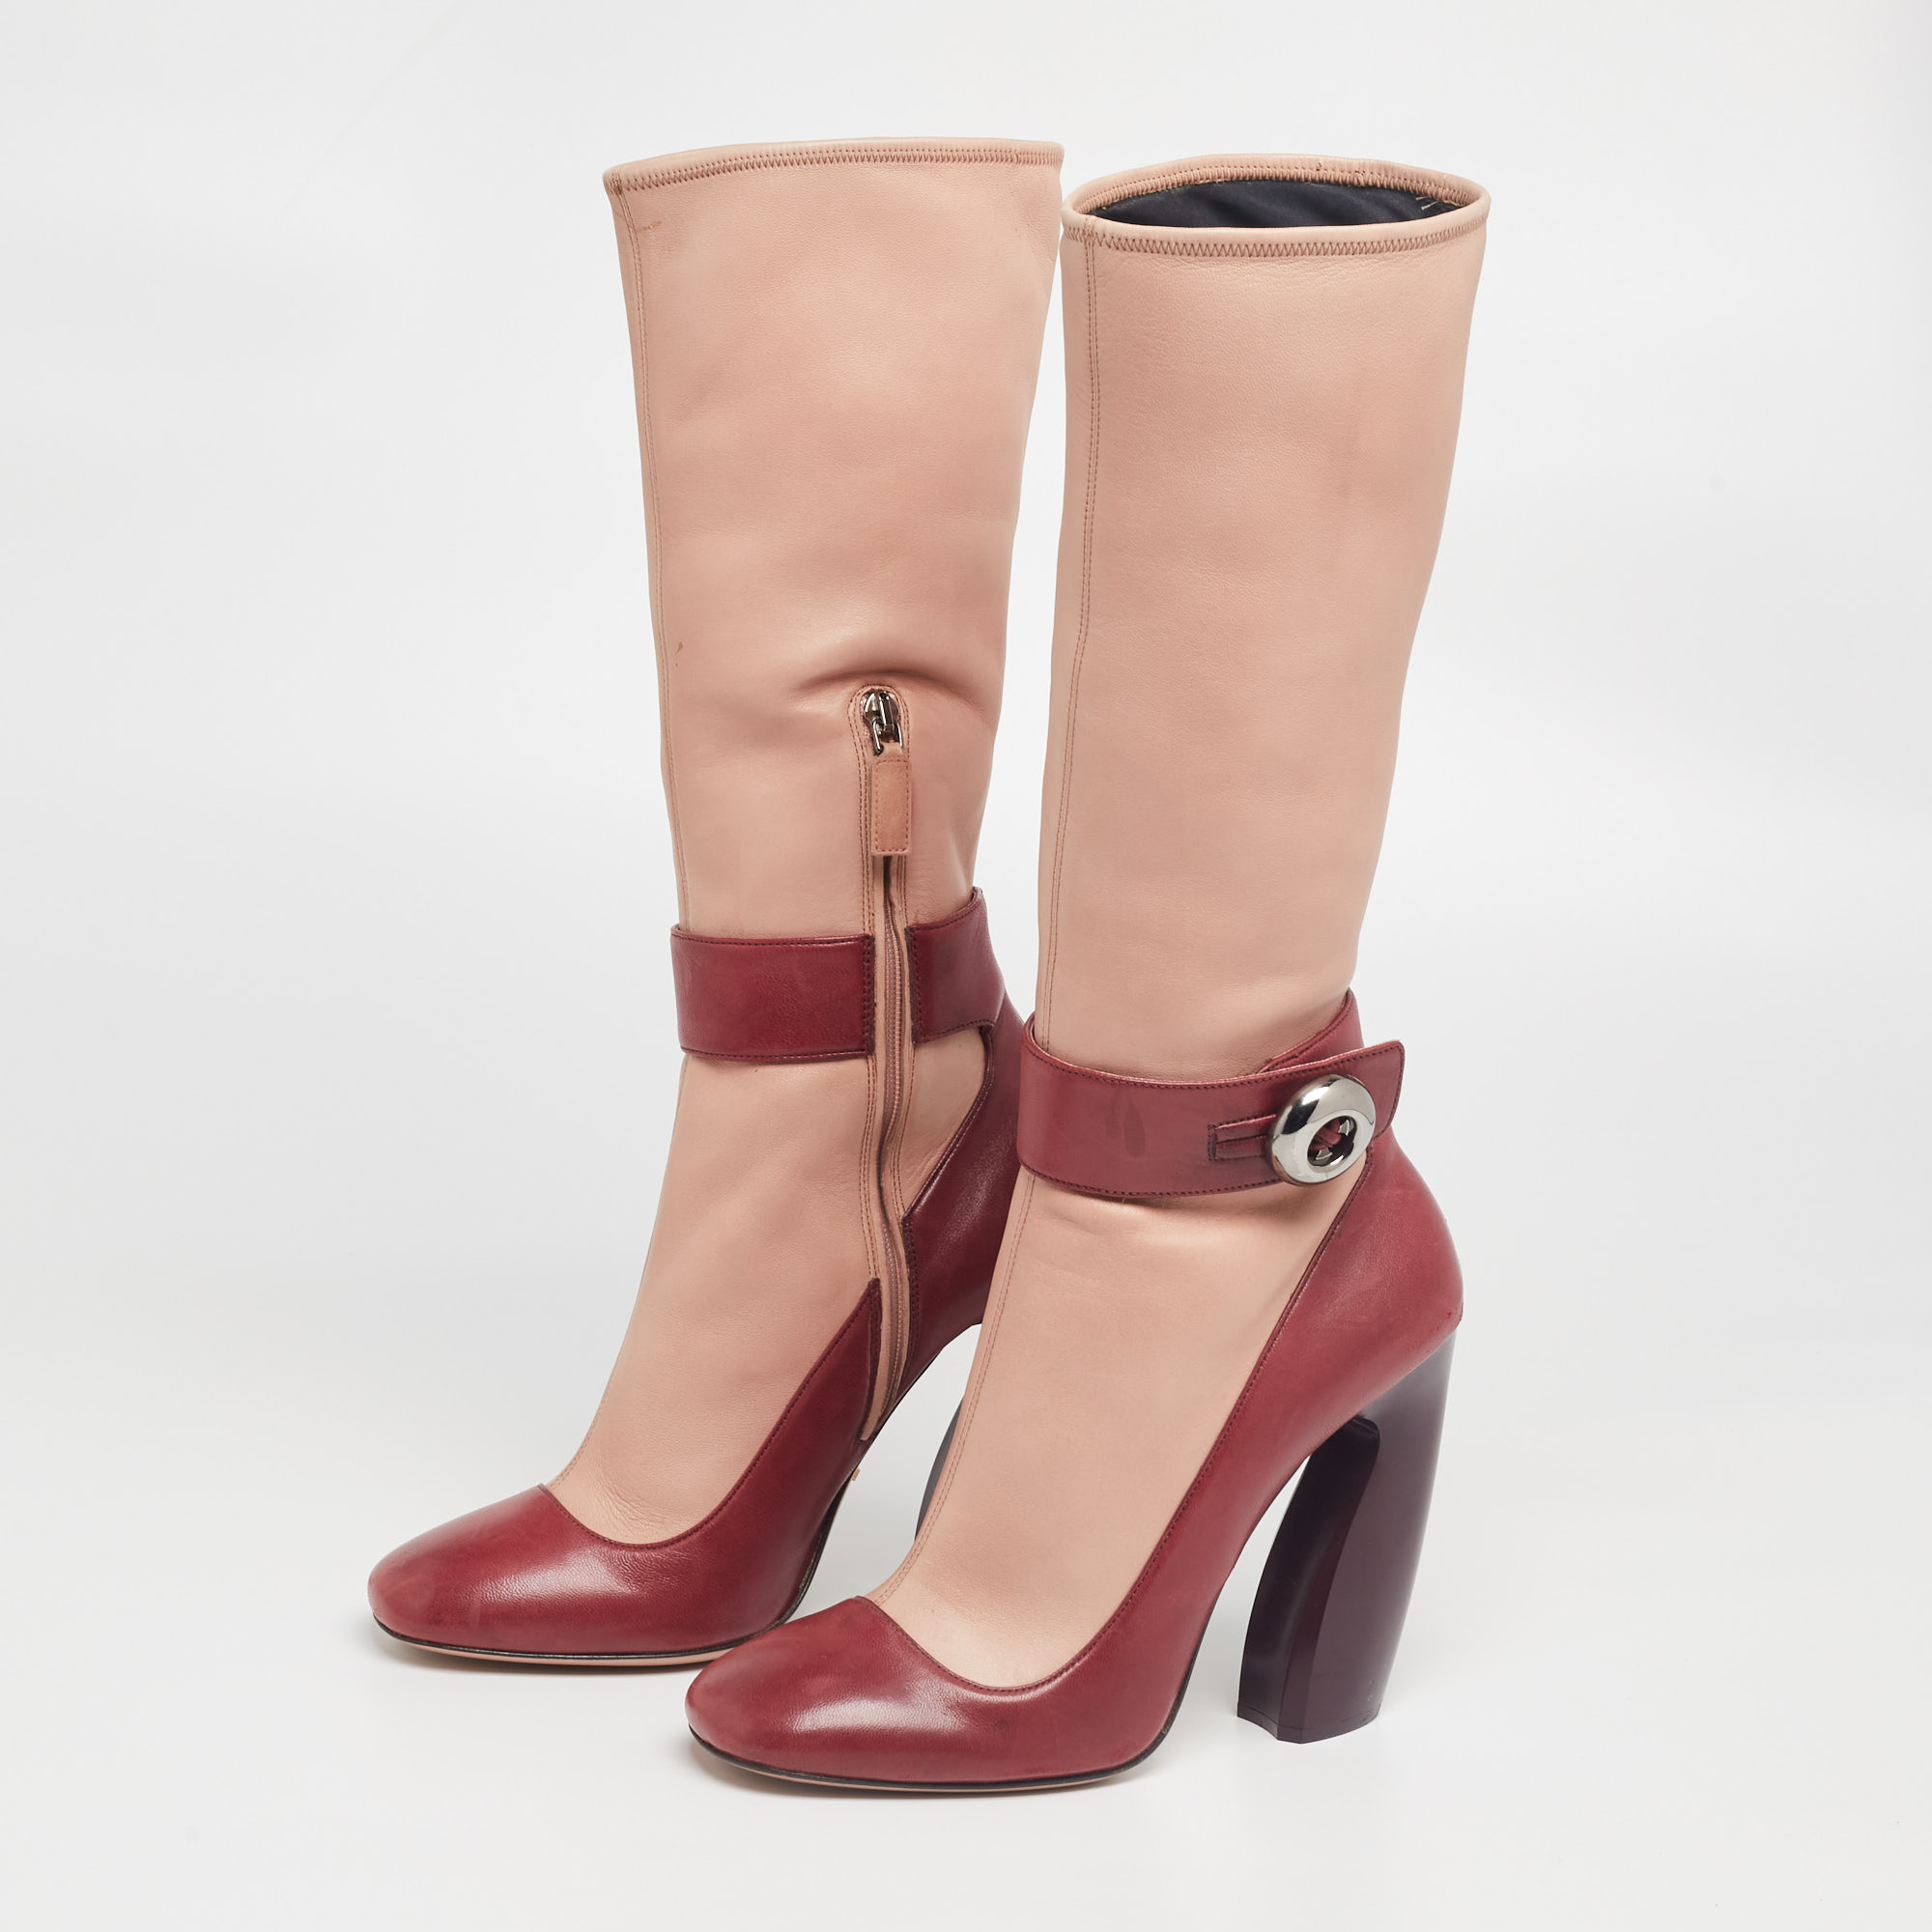 

Prada Beige/Burgundy Leather Mid Calf Length Boots Size